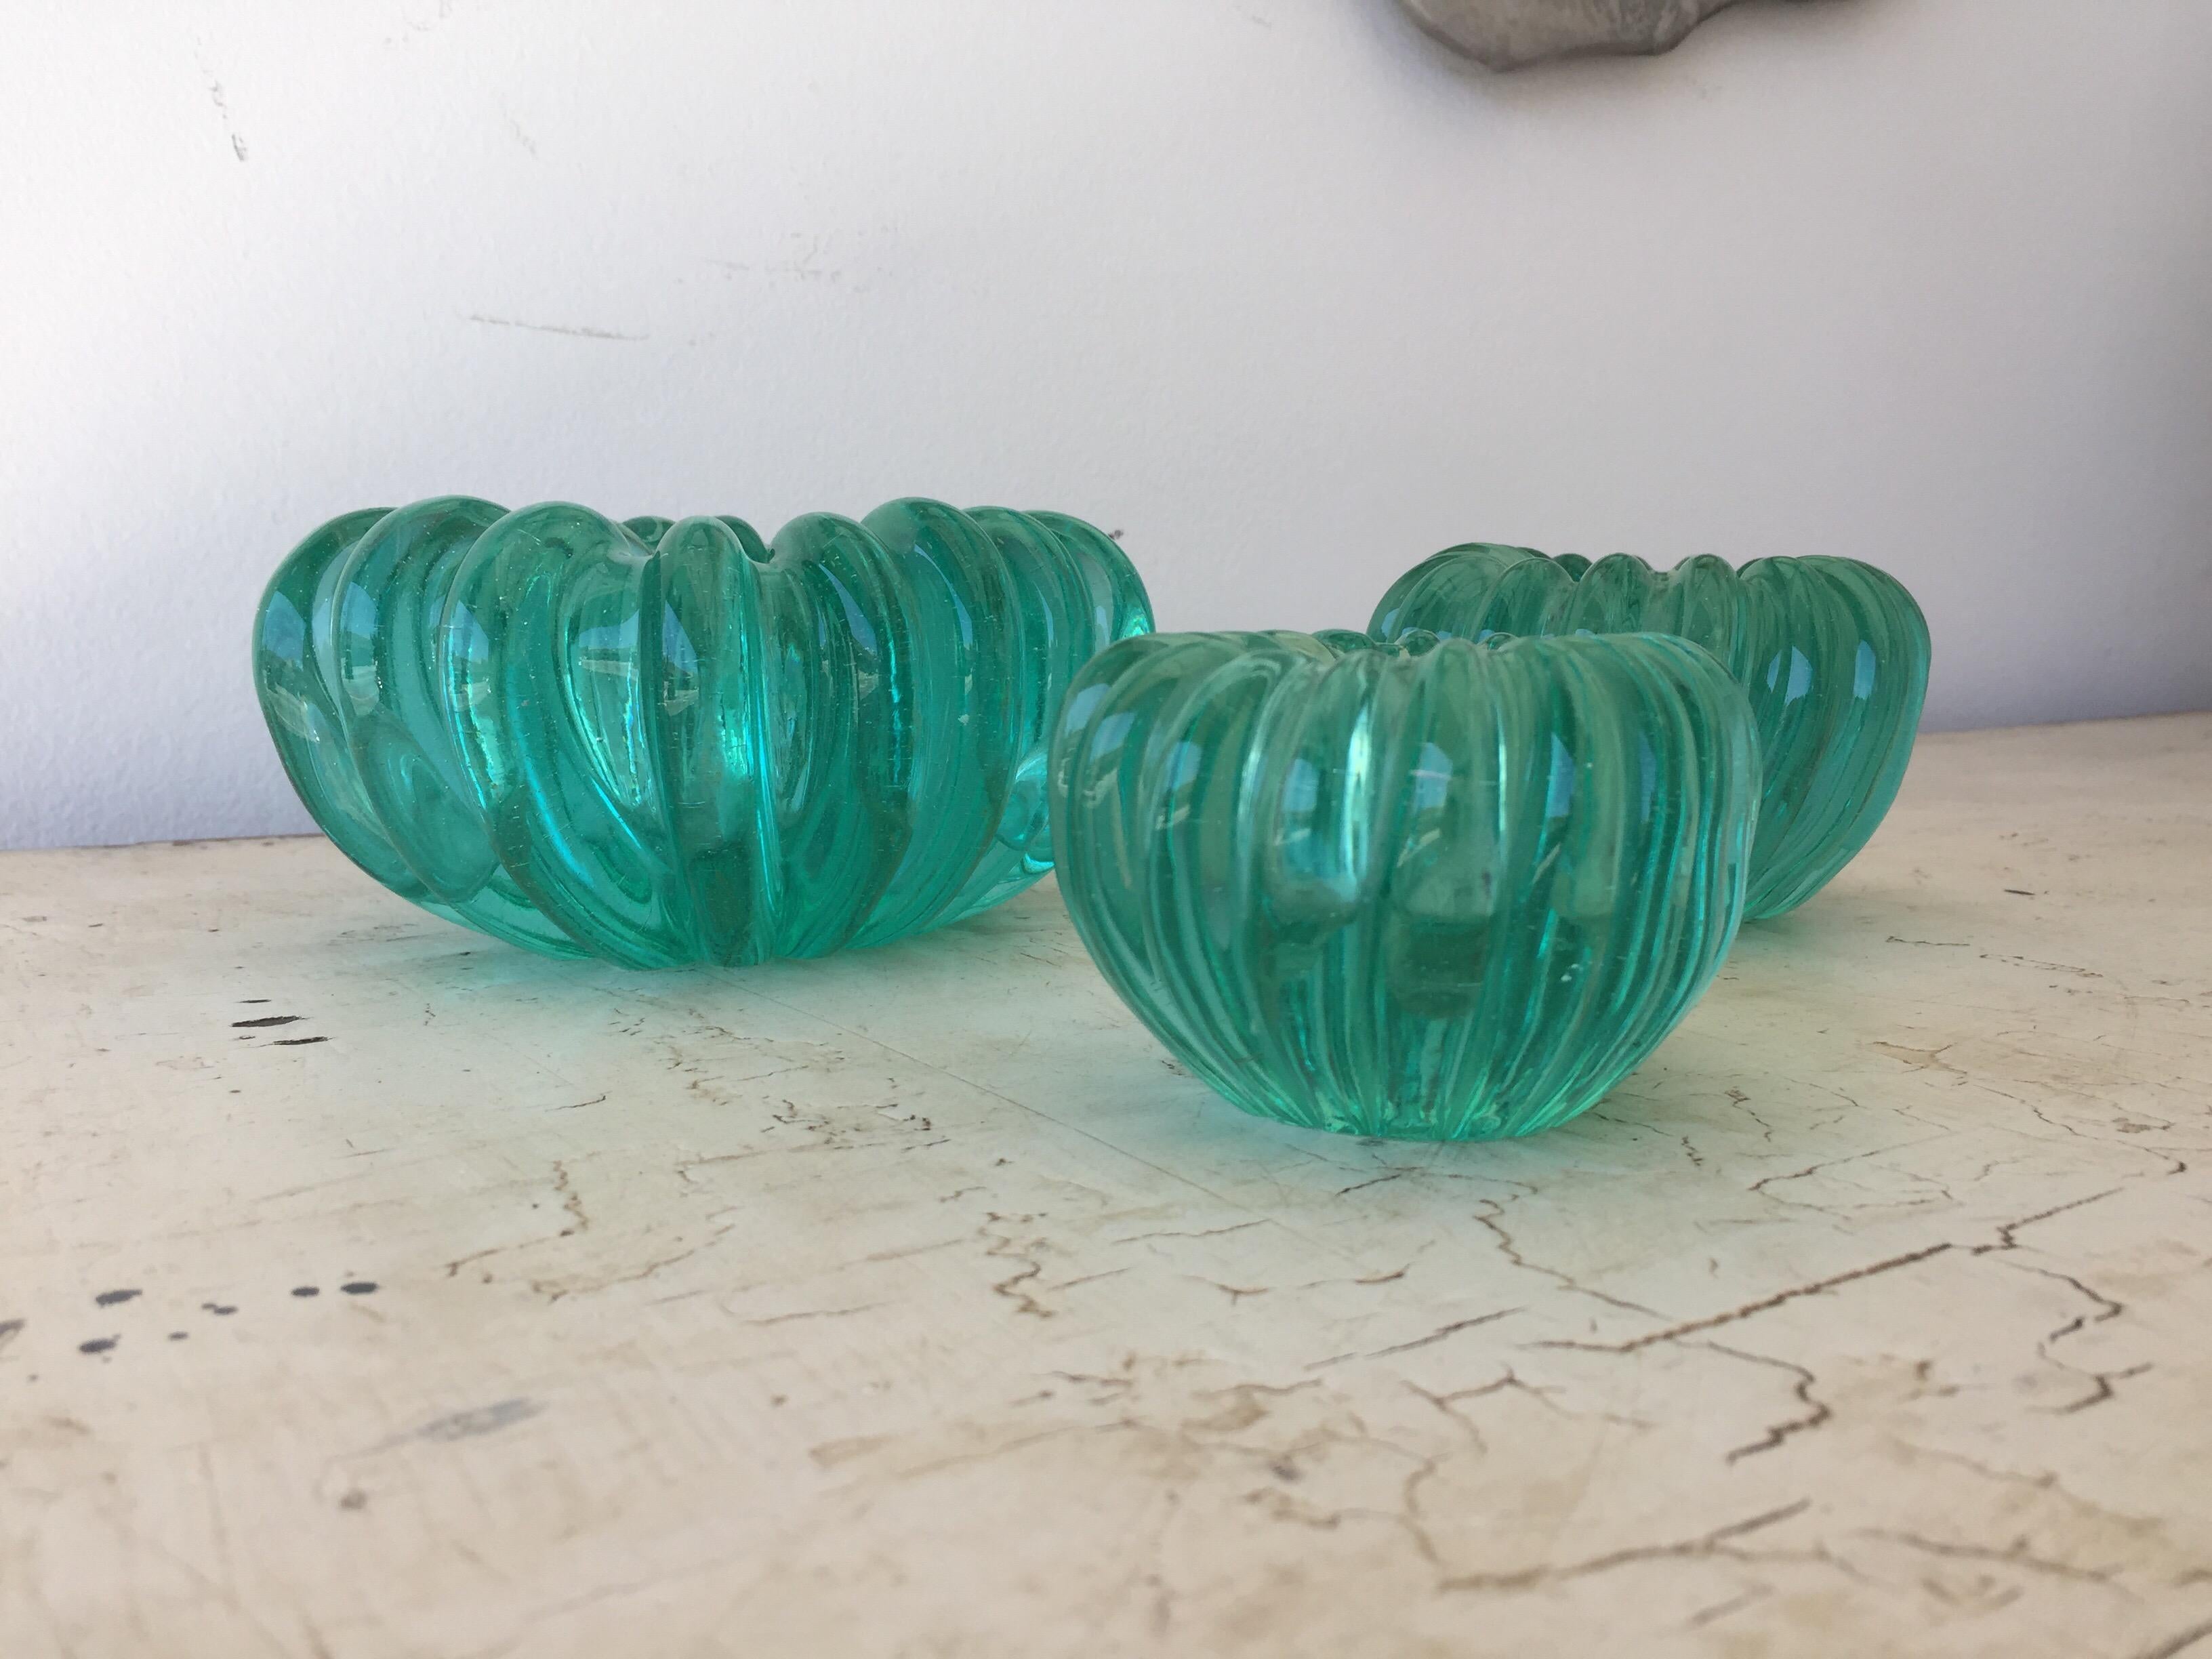 Three beautiful Murano bowls in descending sizes, rich jewel-tone green, all hand blown. 

Dimensions of bowls: Large = 6.5 W x 5.75 D x 3.25 H, medium = 4.75 W x 4.25 D x 3 H, small = 3.75 W x 3.25 D x 2.5 H.